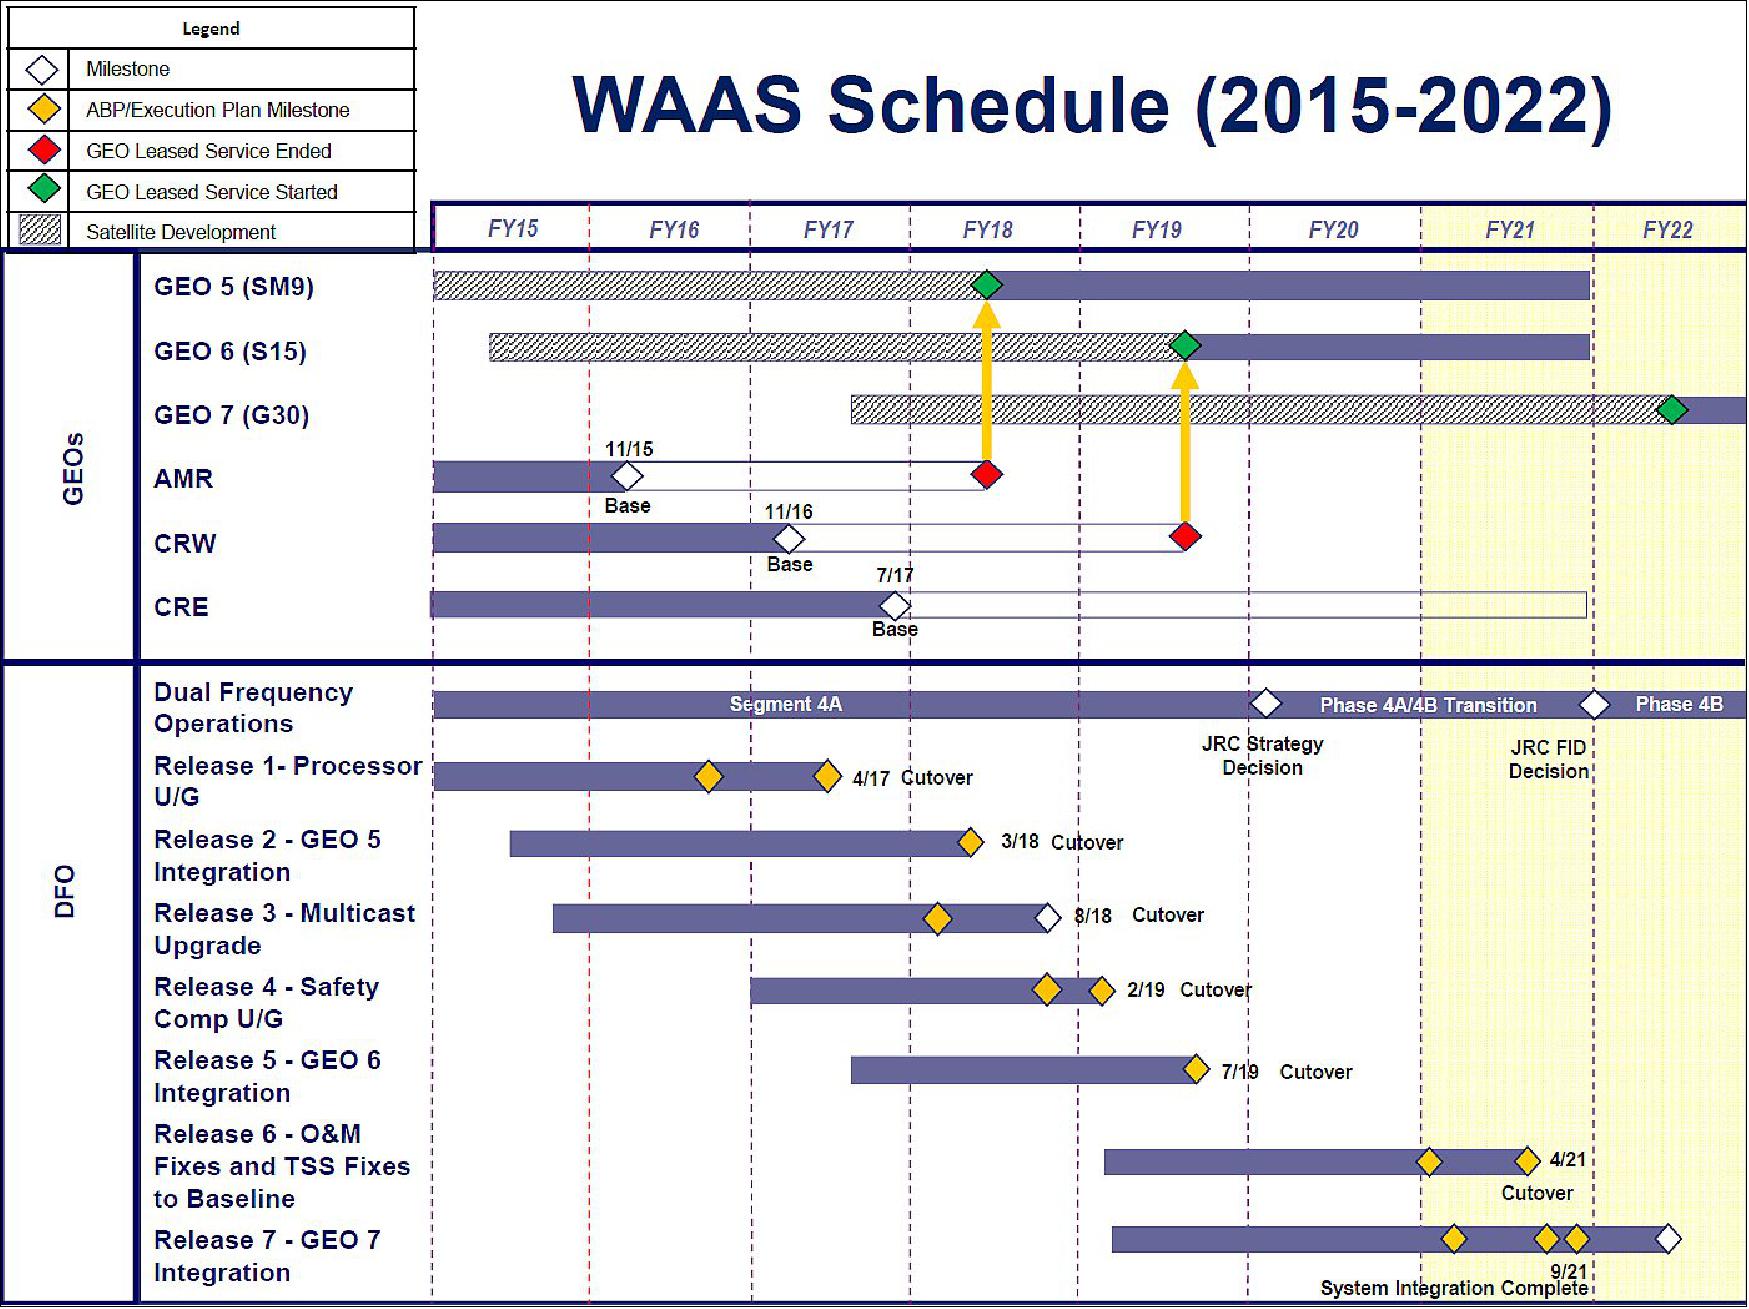 Figure 8: WAAS schedule in the period 2015-2022 (image credit: FAA)